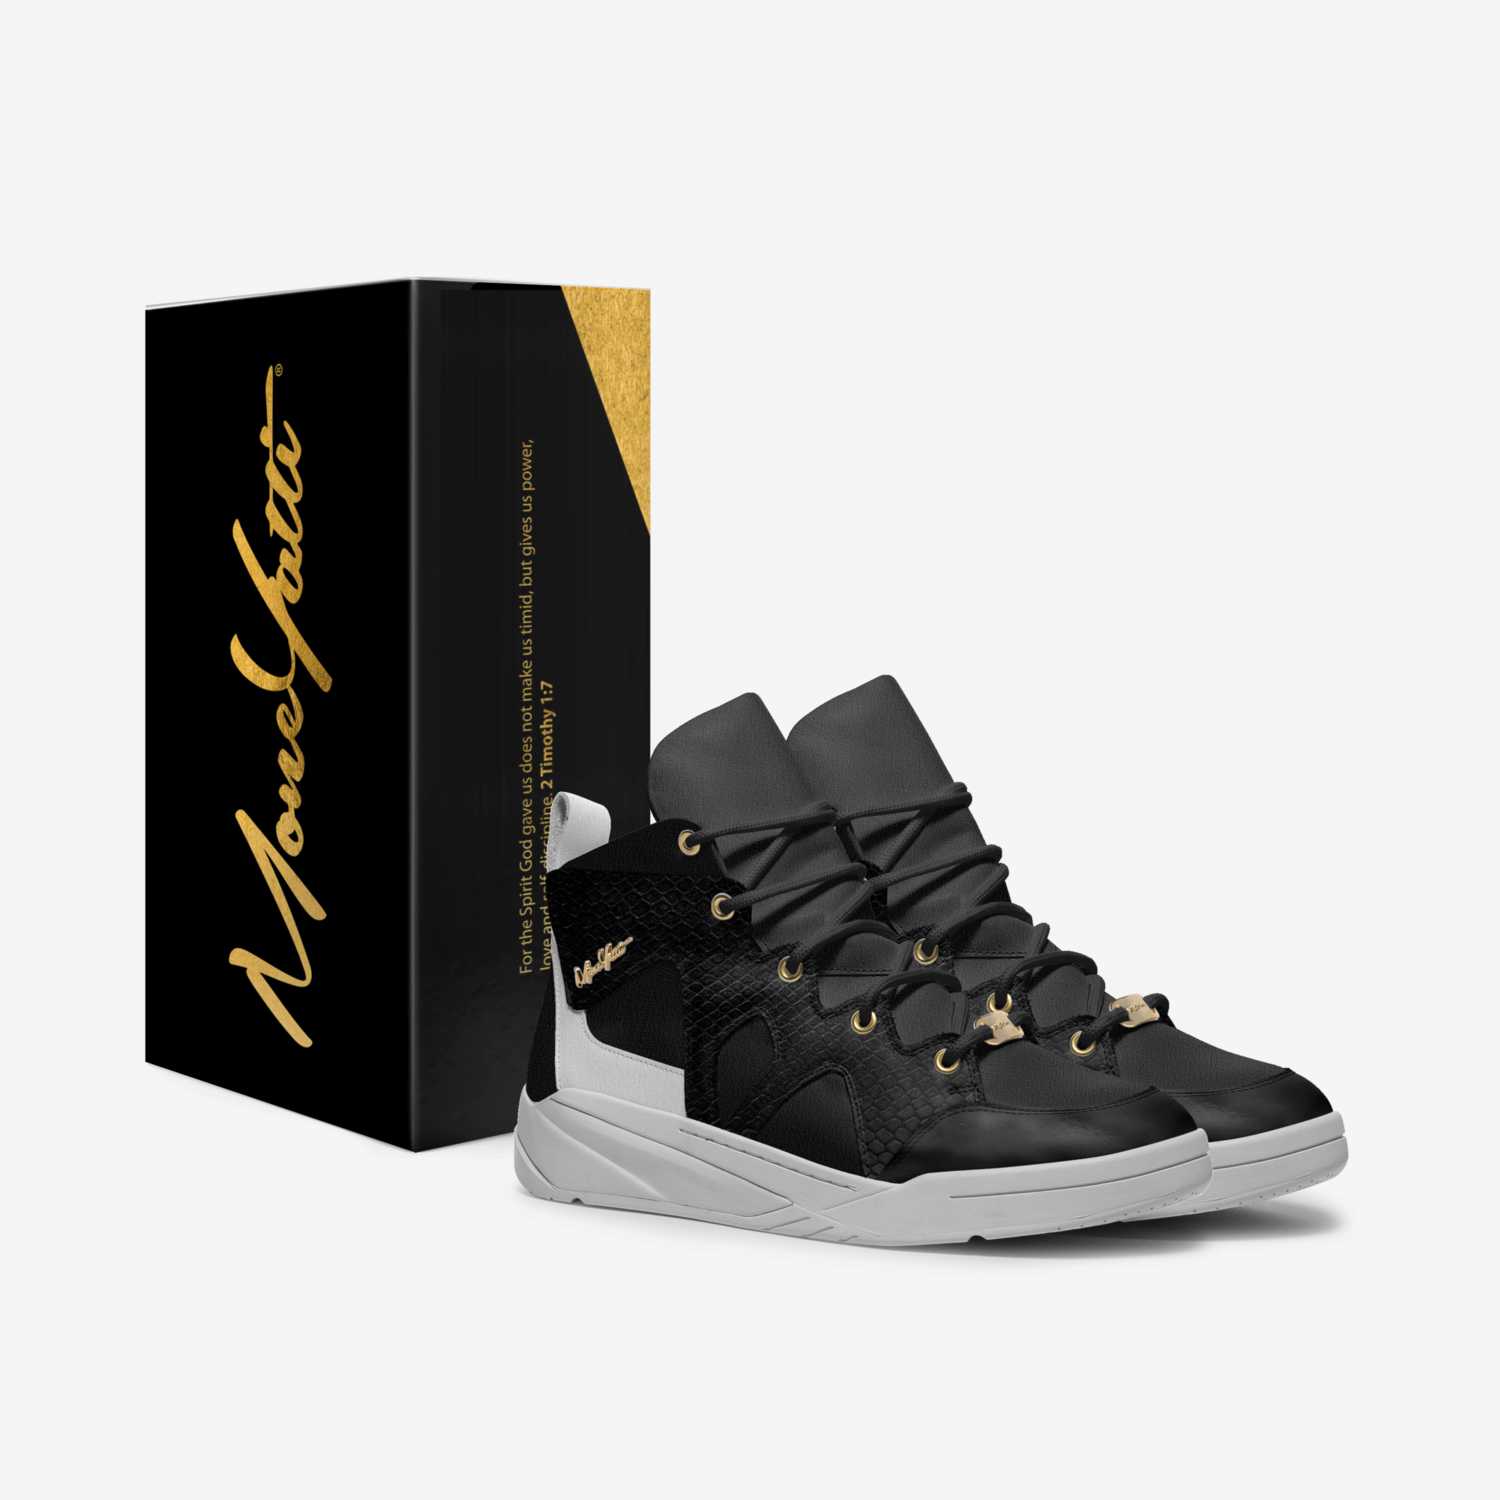 MONEYATTI TAKEOFF 007 custom made in Italy shoes by Moneyatti Brand | Box view